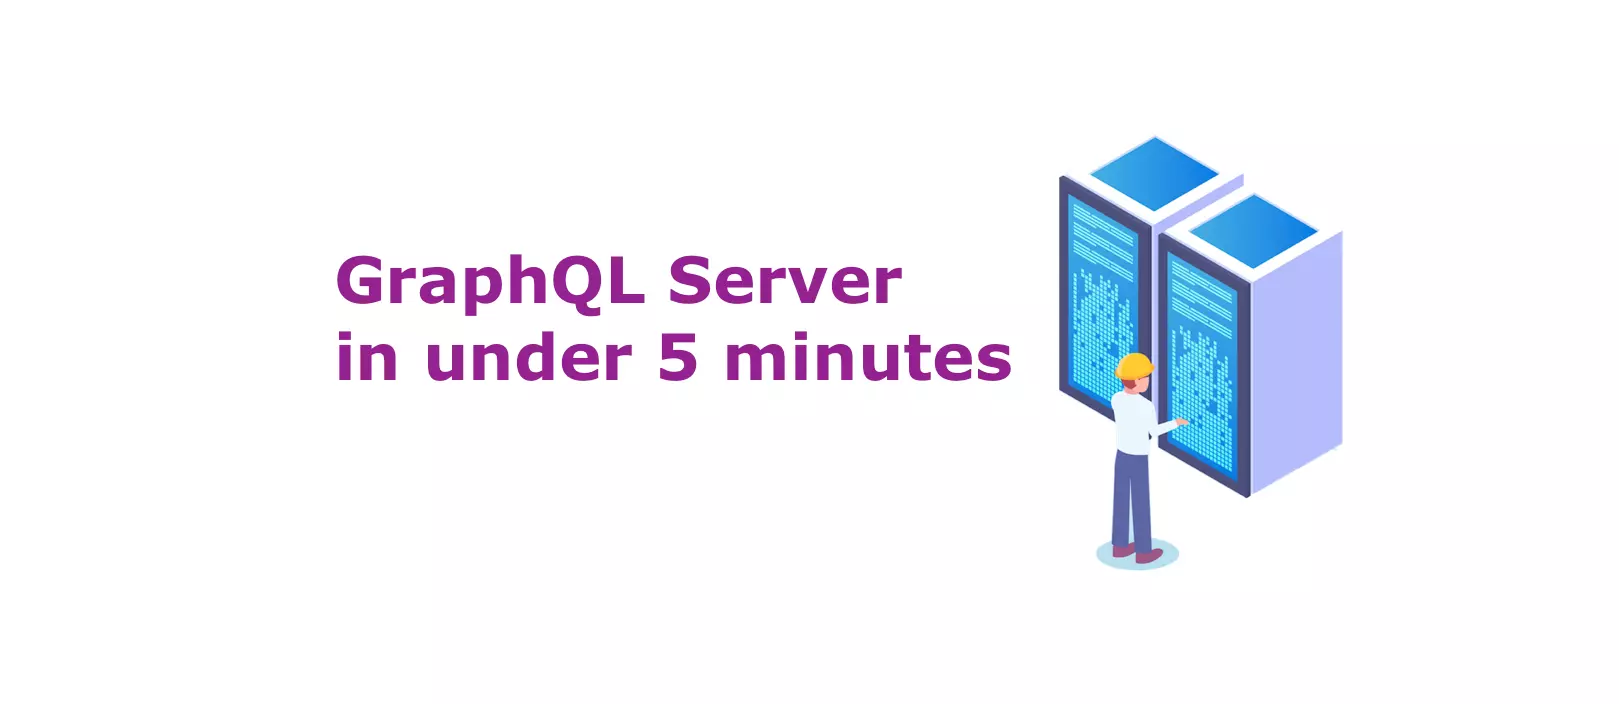 GraphQL Server under 5 minutes - TypeScript